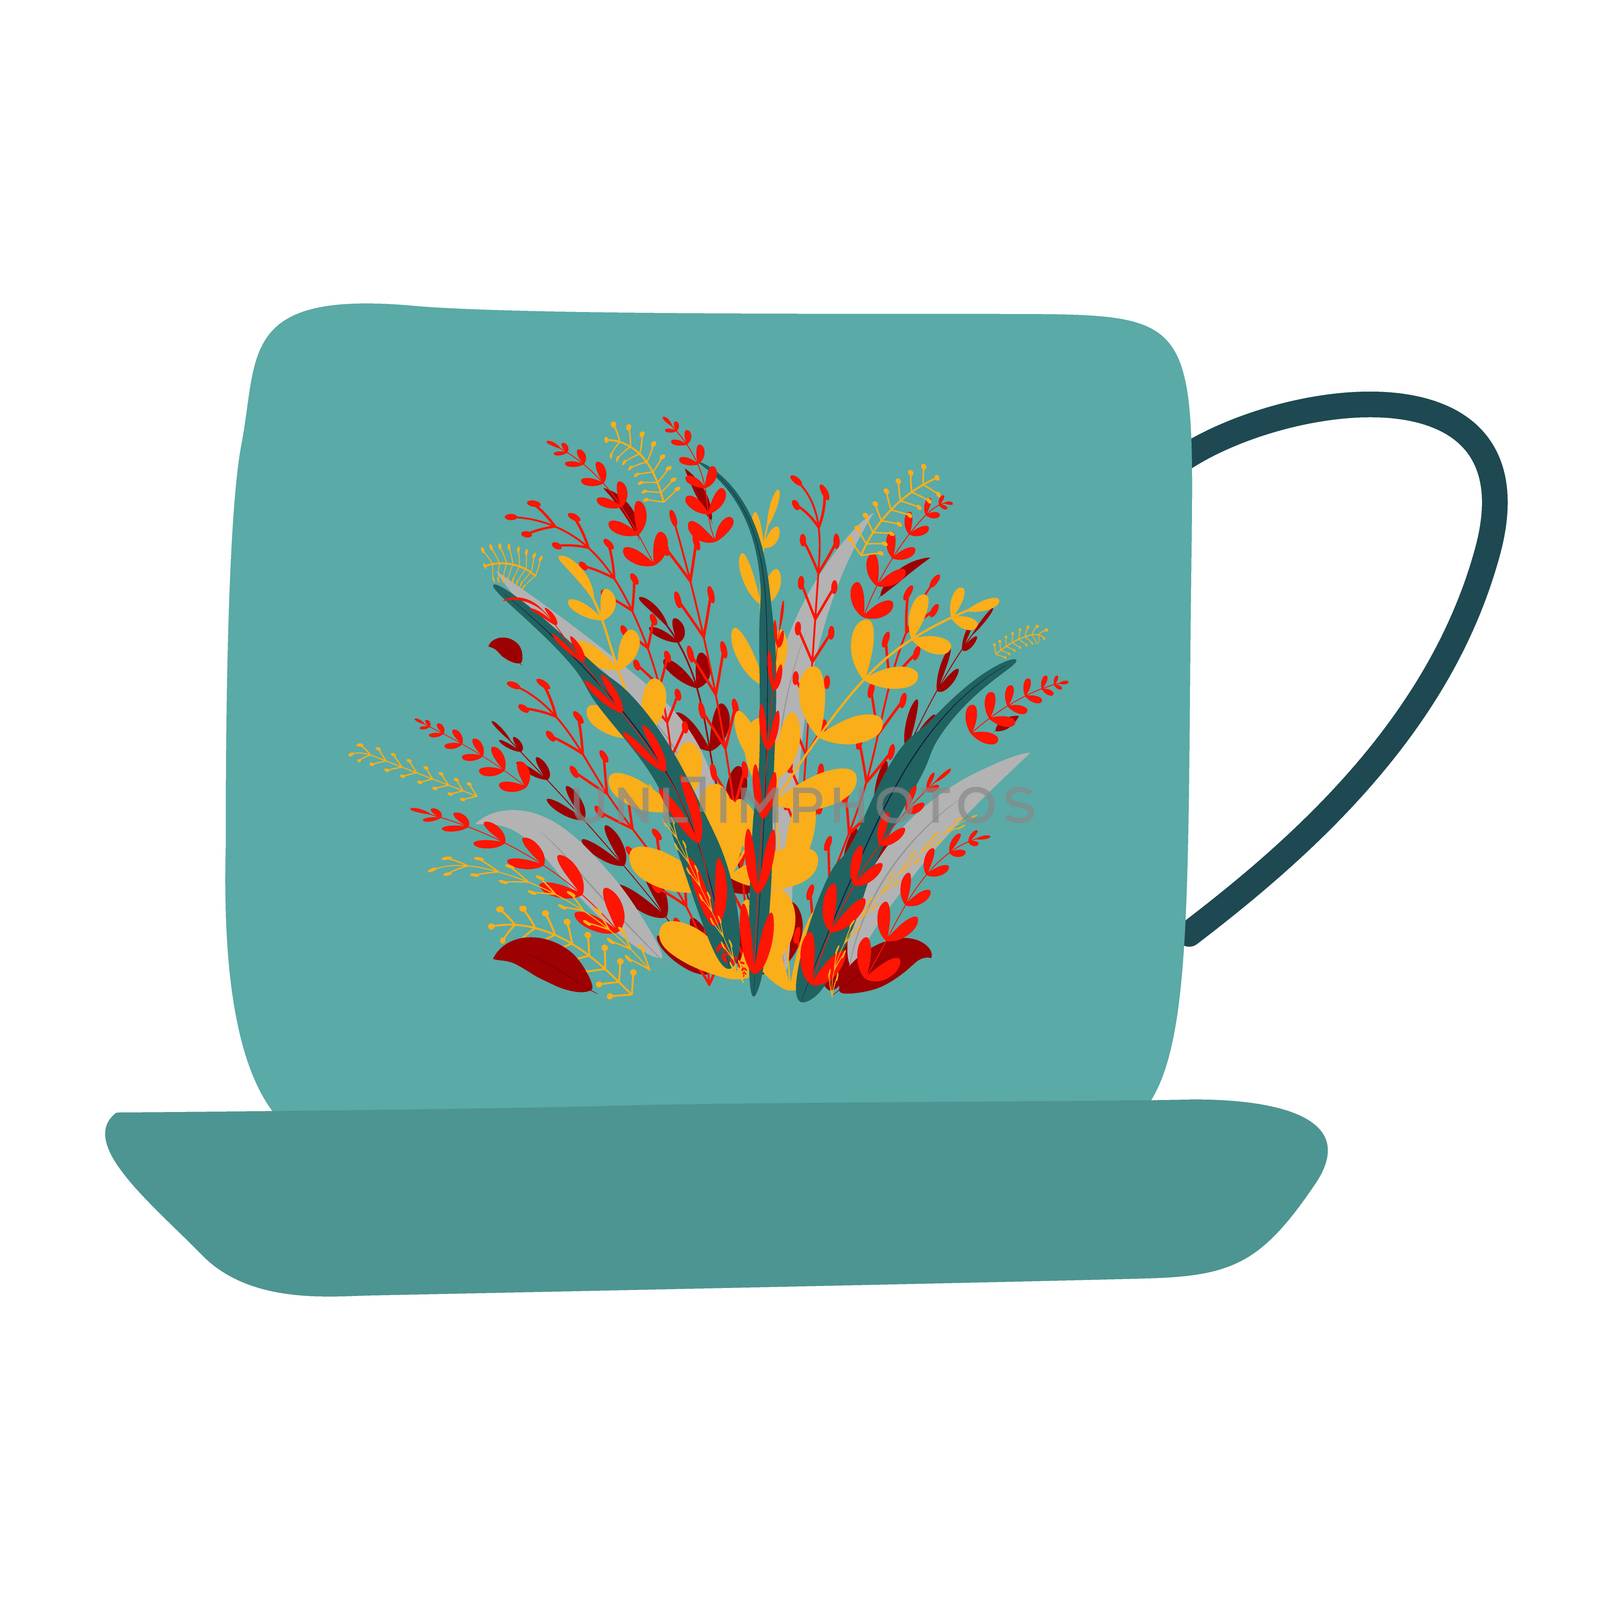 Retro blue tea cup with orange leaves decor. by Nata_Prando